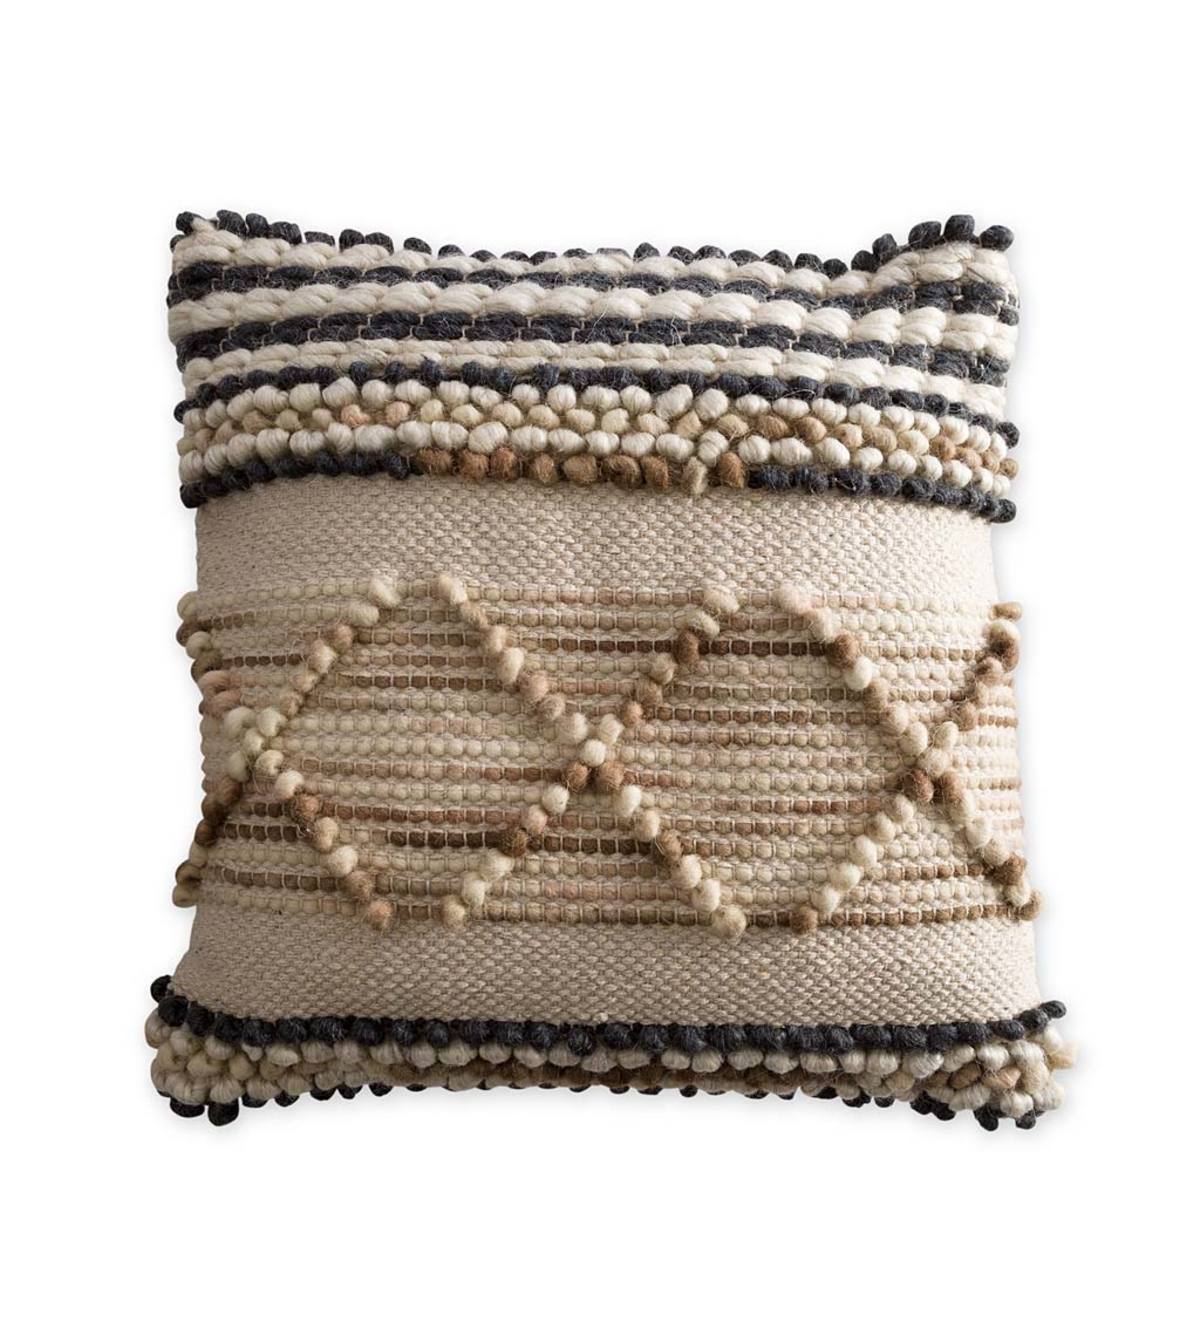 Woven Boho Textured Throw Pillow, Striped Pebble | Eligible for ...